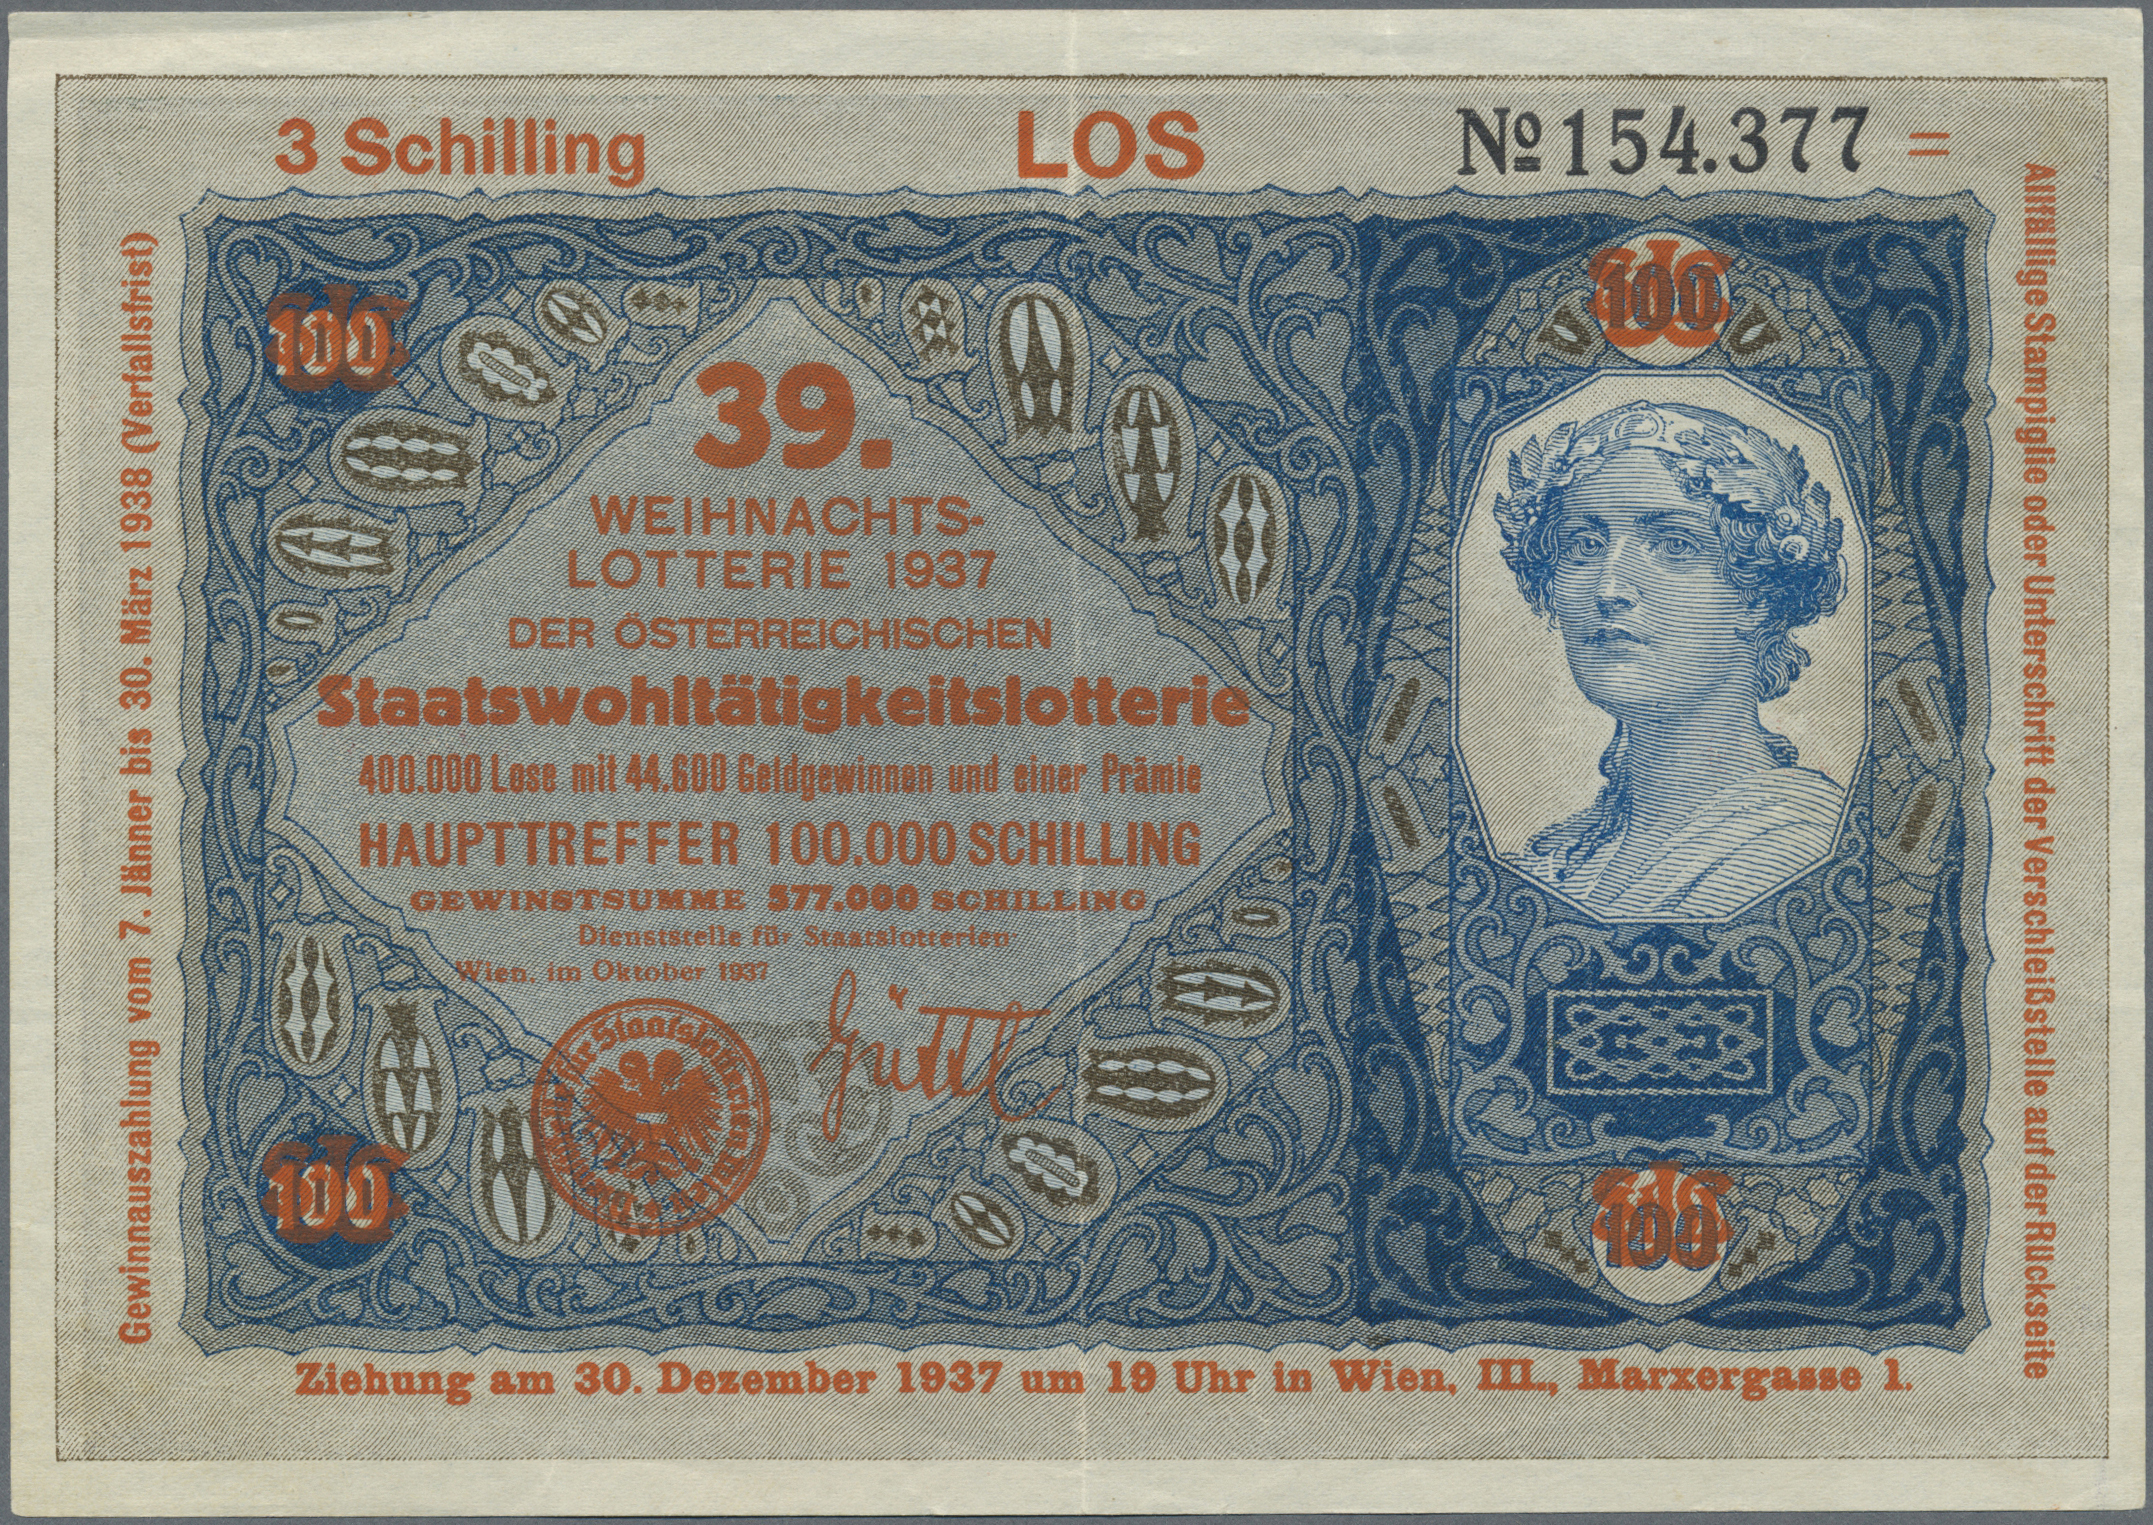 Lot 160 - Austria / Österreich | Banknoten  -  Auktionshaus Christoph Gärtner GmbH & Co. KG Bank notes Auction #42 Day 1